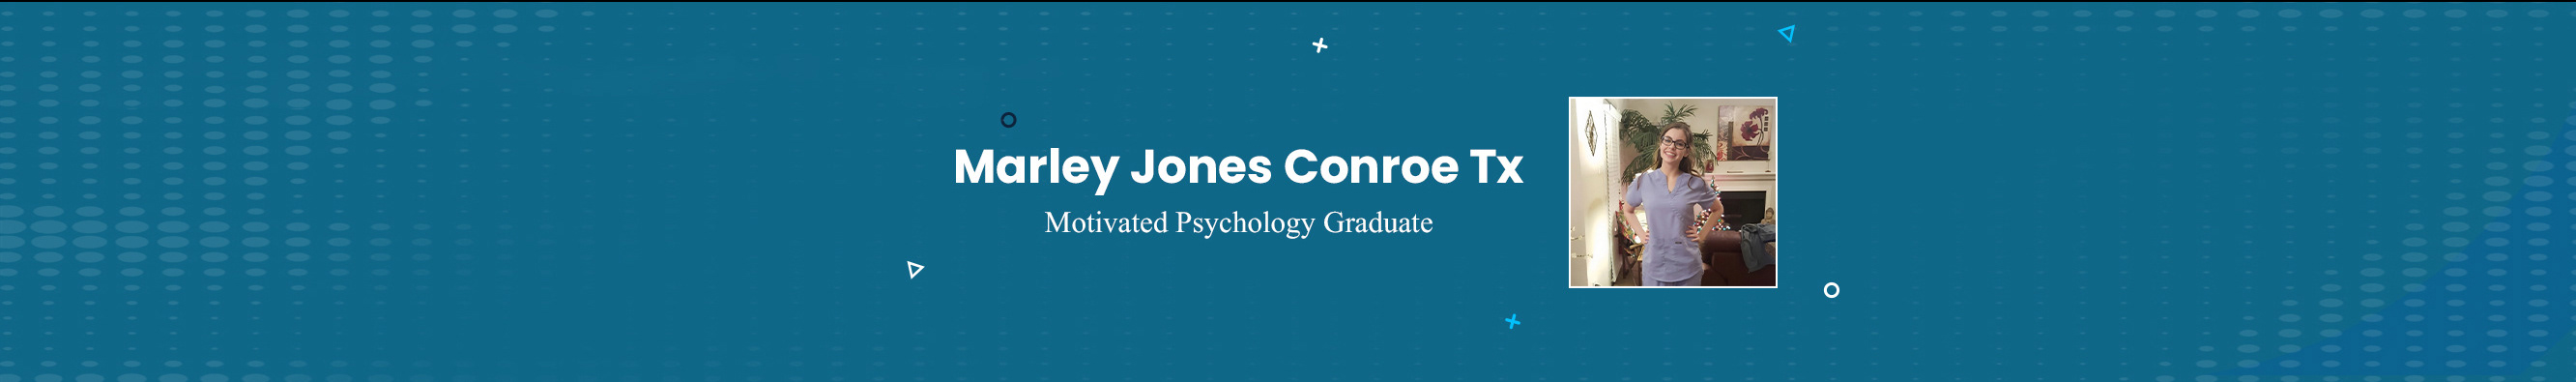 Marley Jones Conroe Tx's profile banner